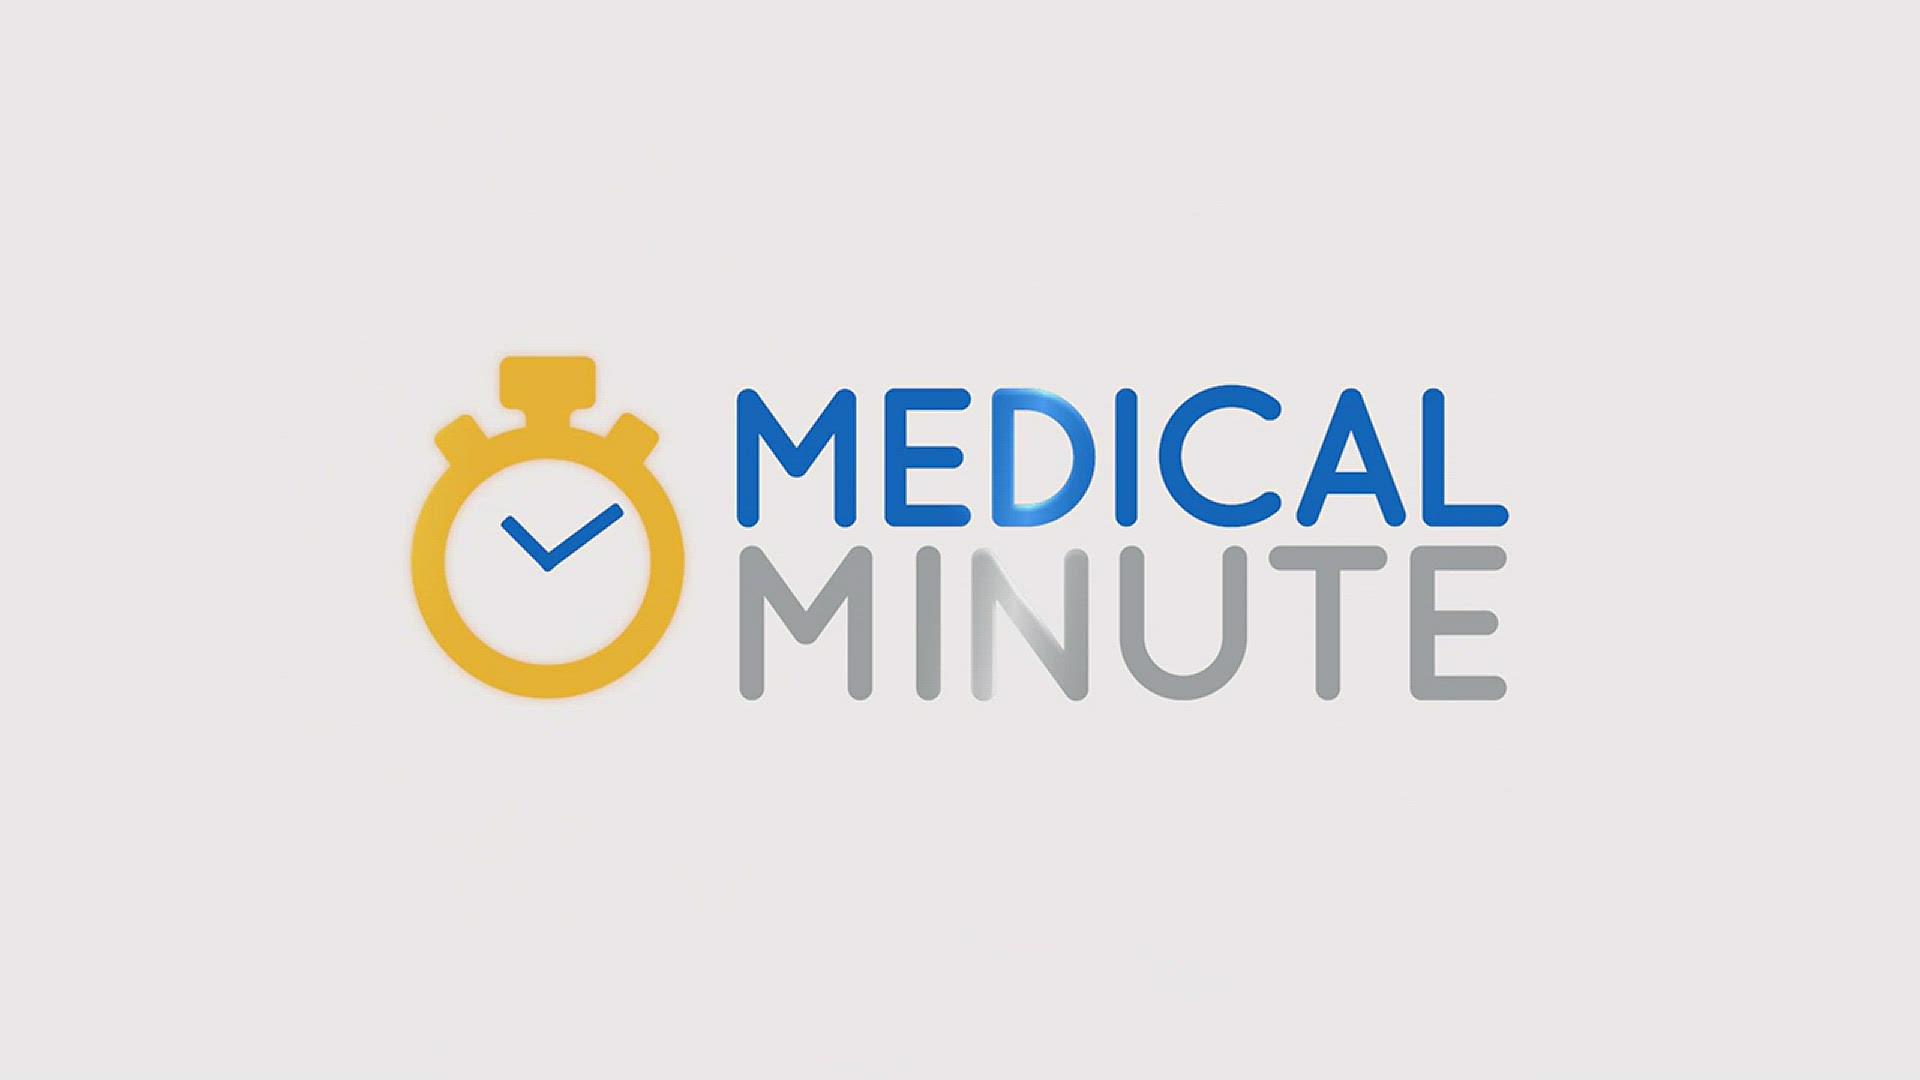 WBIR's Medical Minute this month discusses prescription medication.